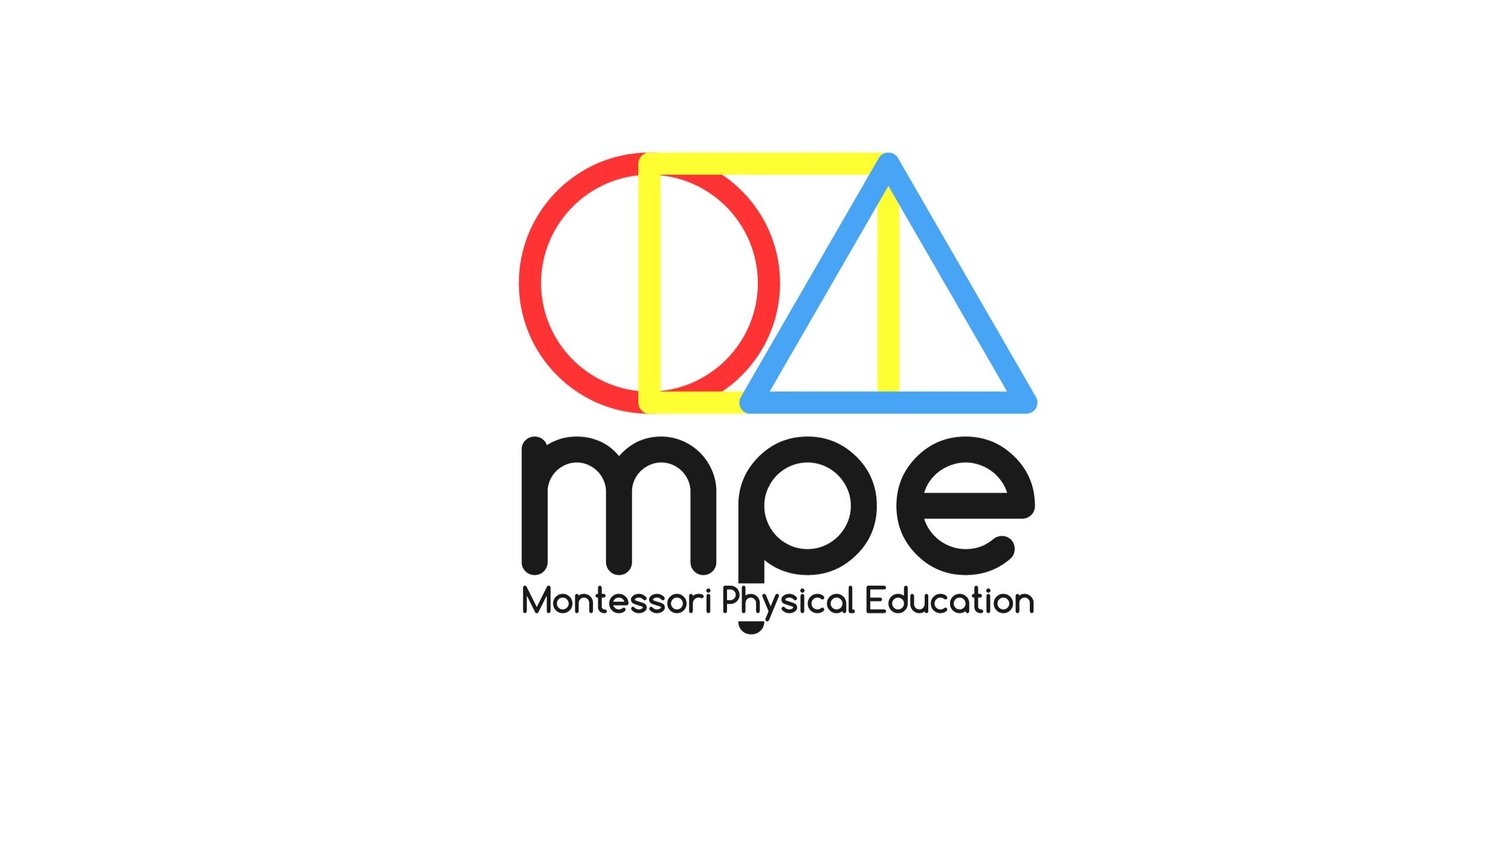 Montessori Physical Education